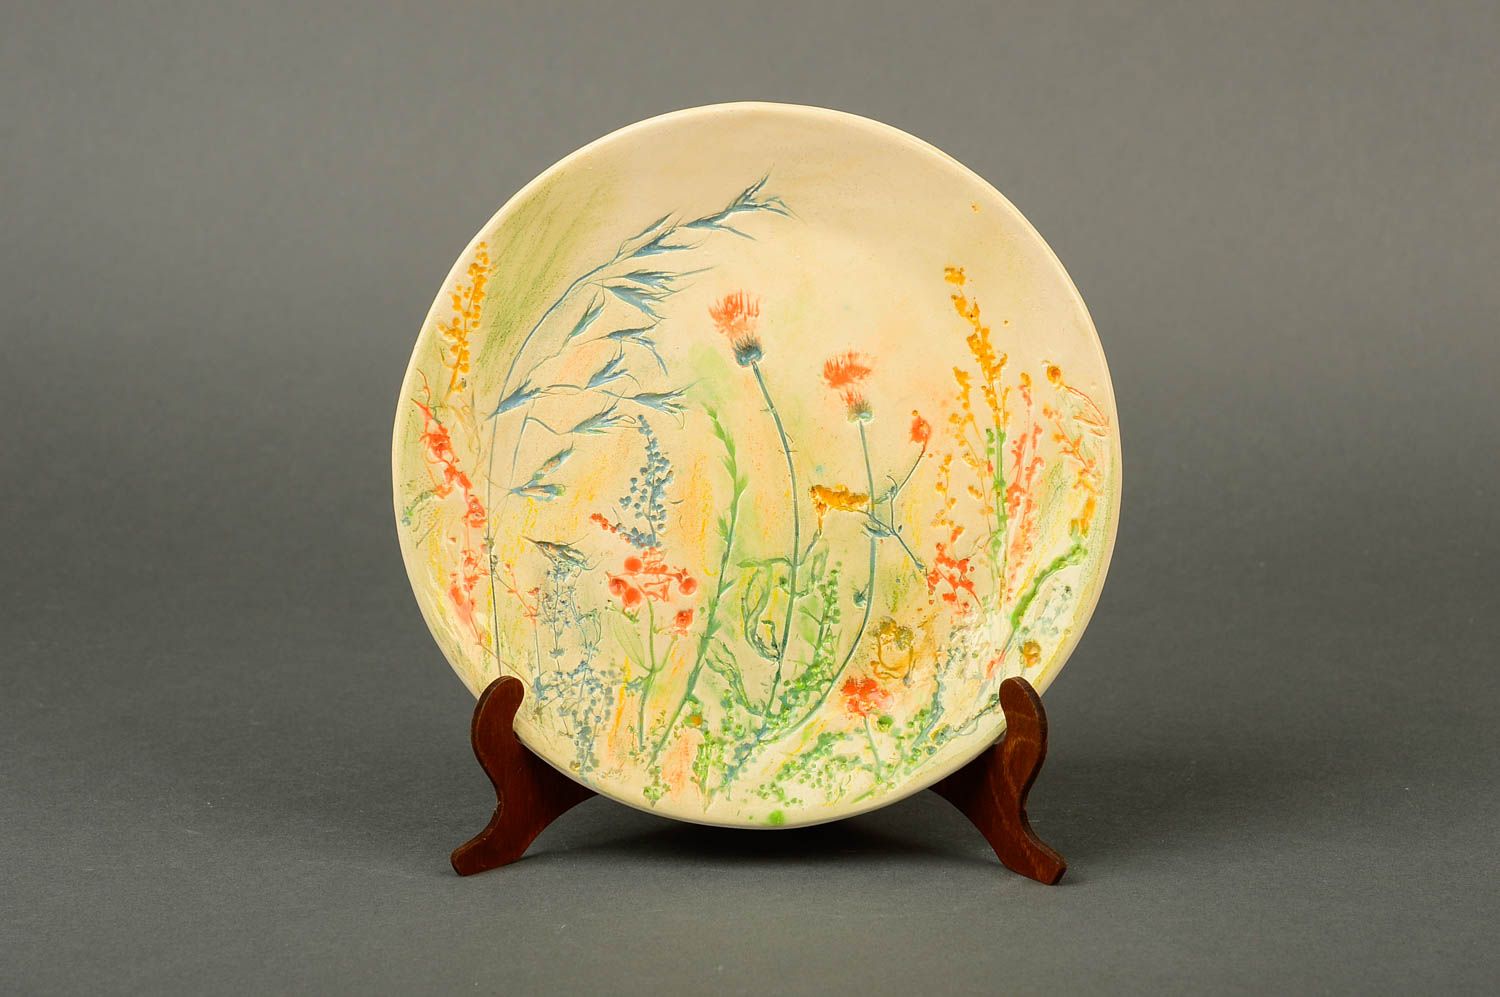 Unusual handmade ceramic plate stylish kitchenware ideas table setting photo 1